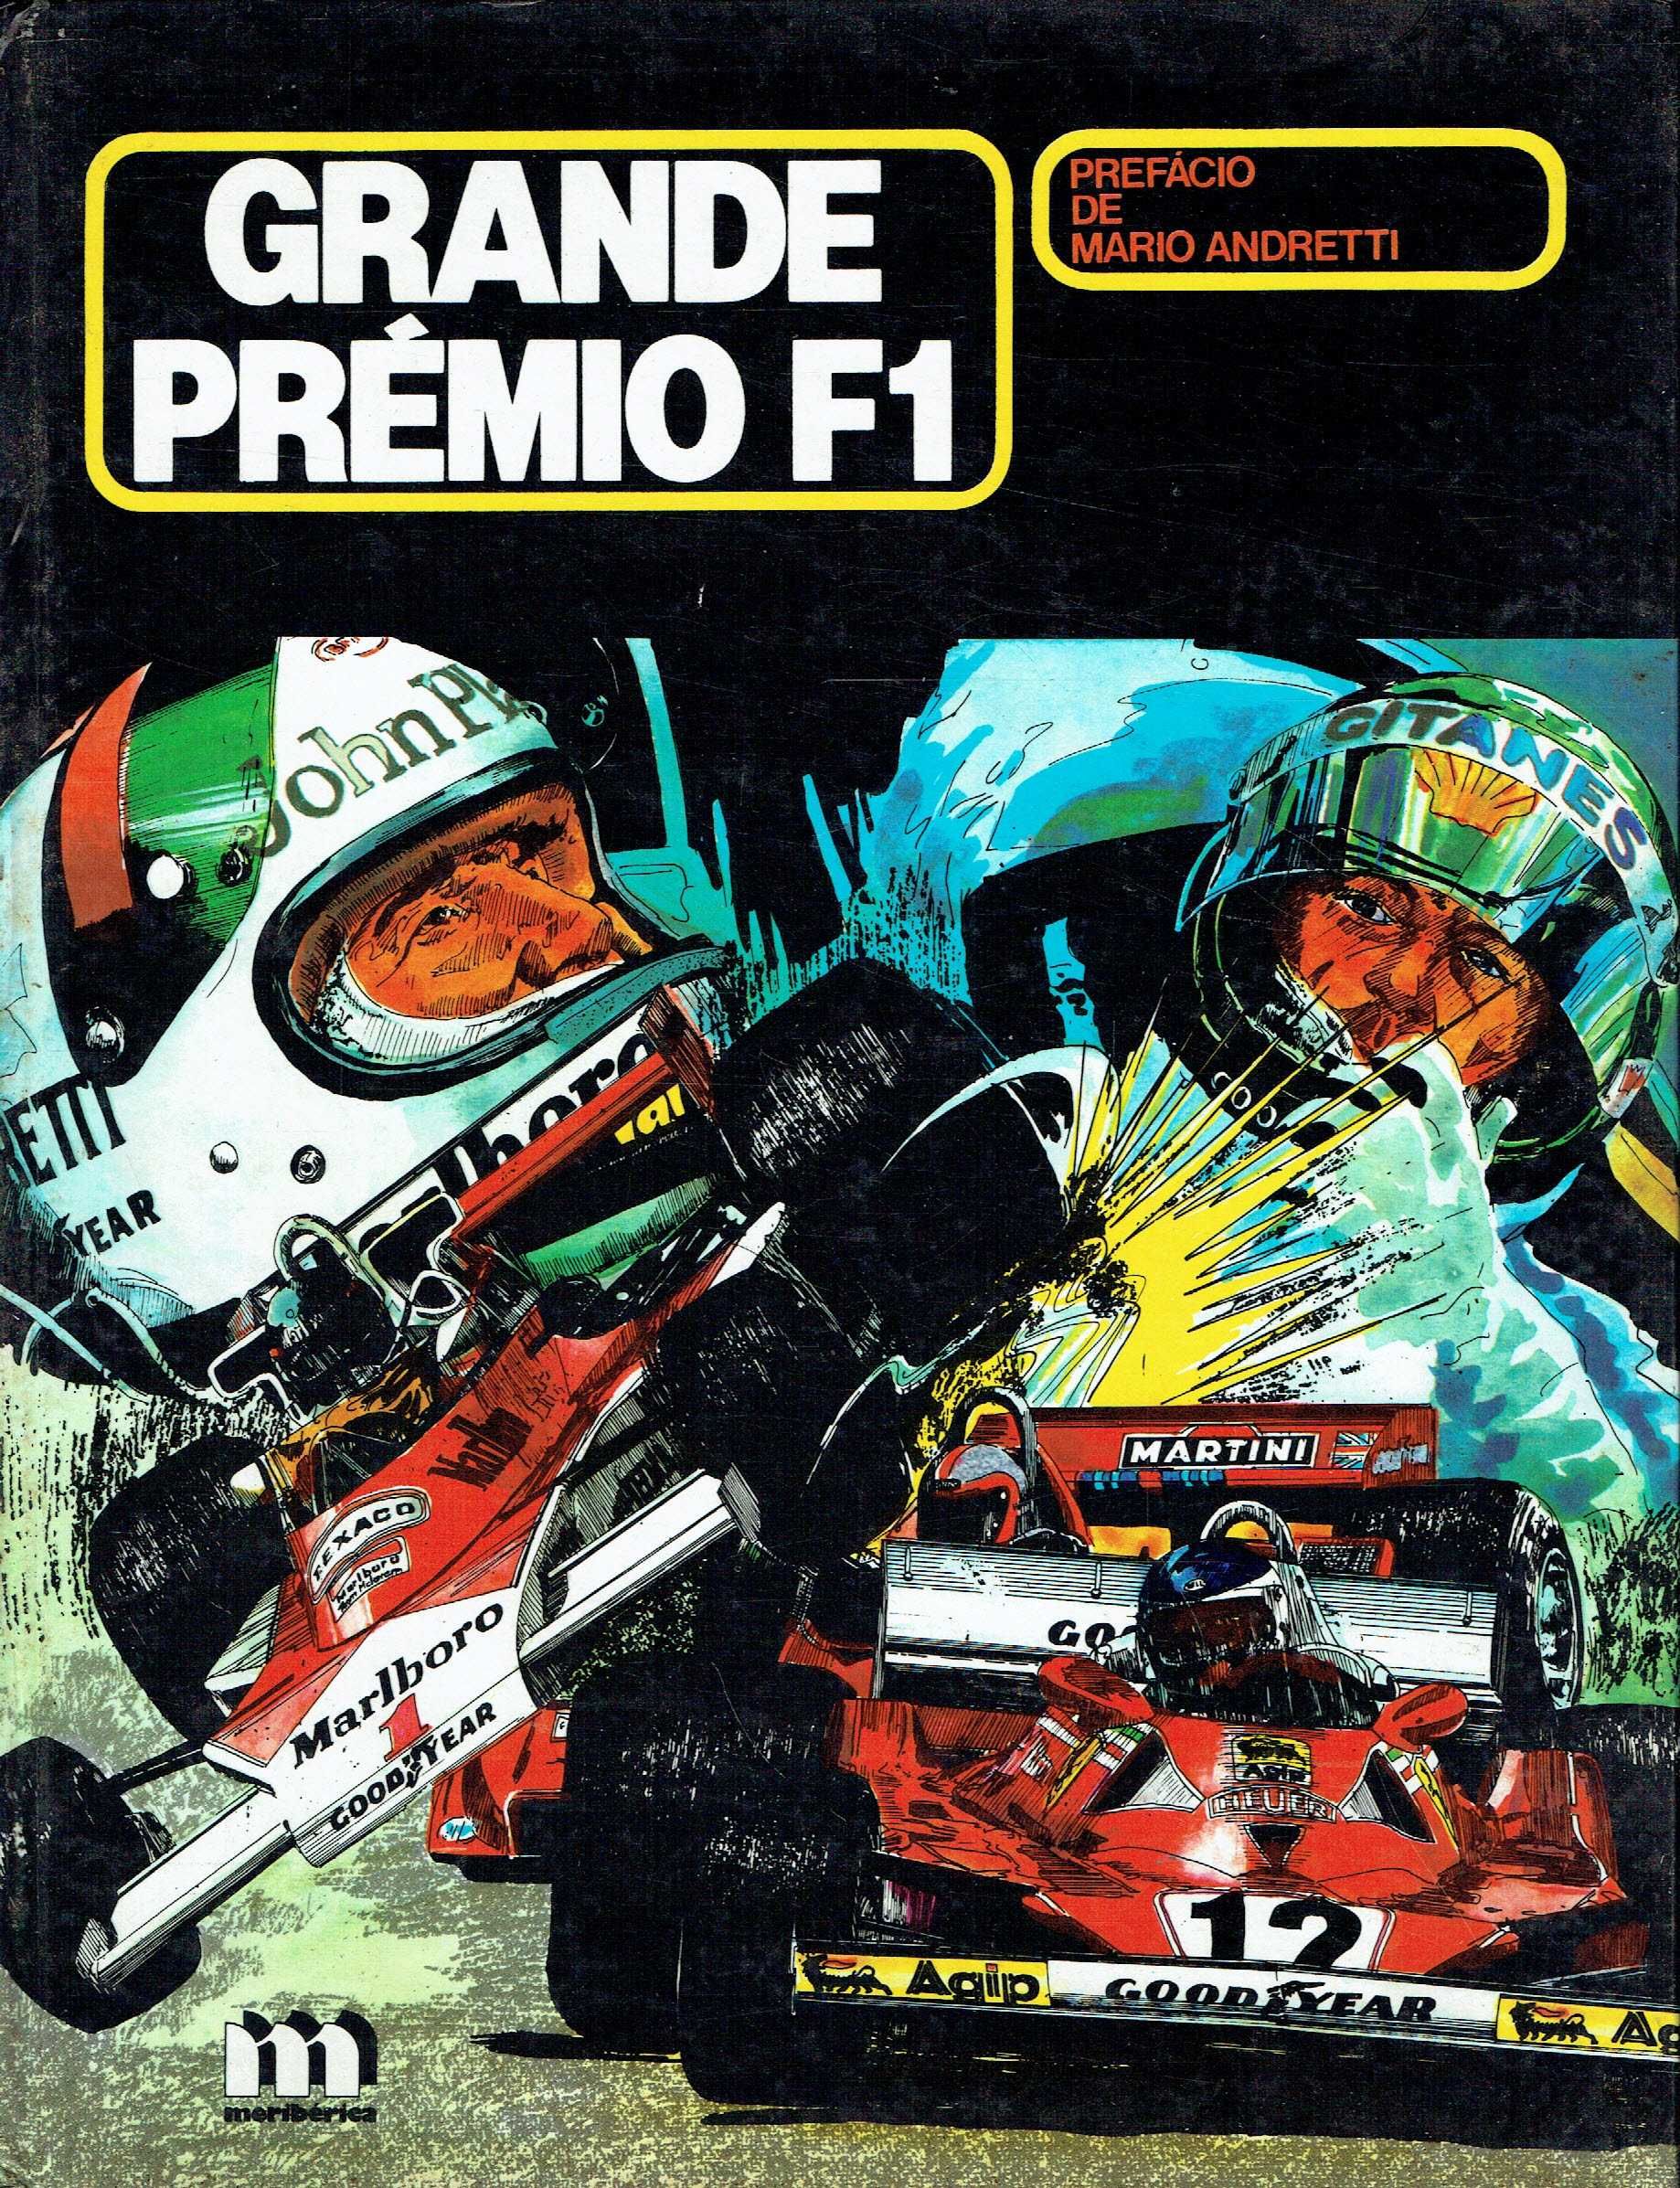 15069

Grande prémio F1
Willy Richard, Mario Luini